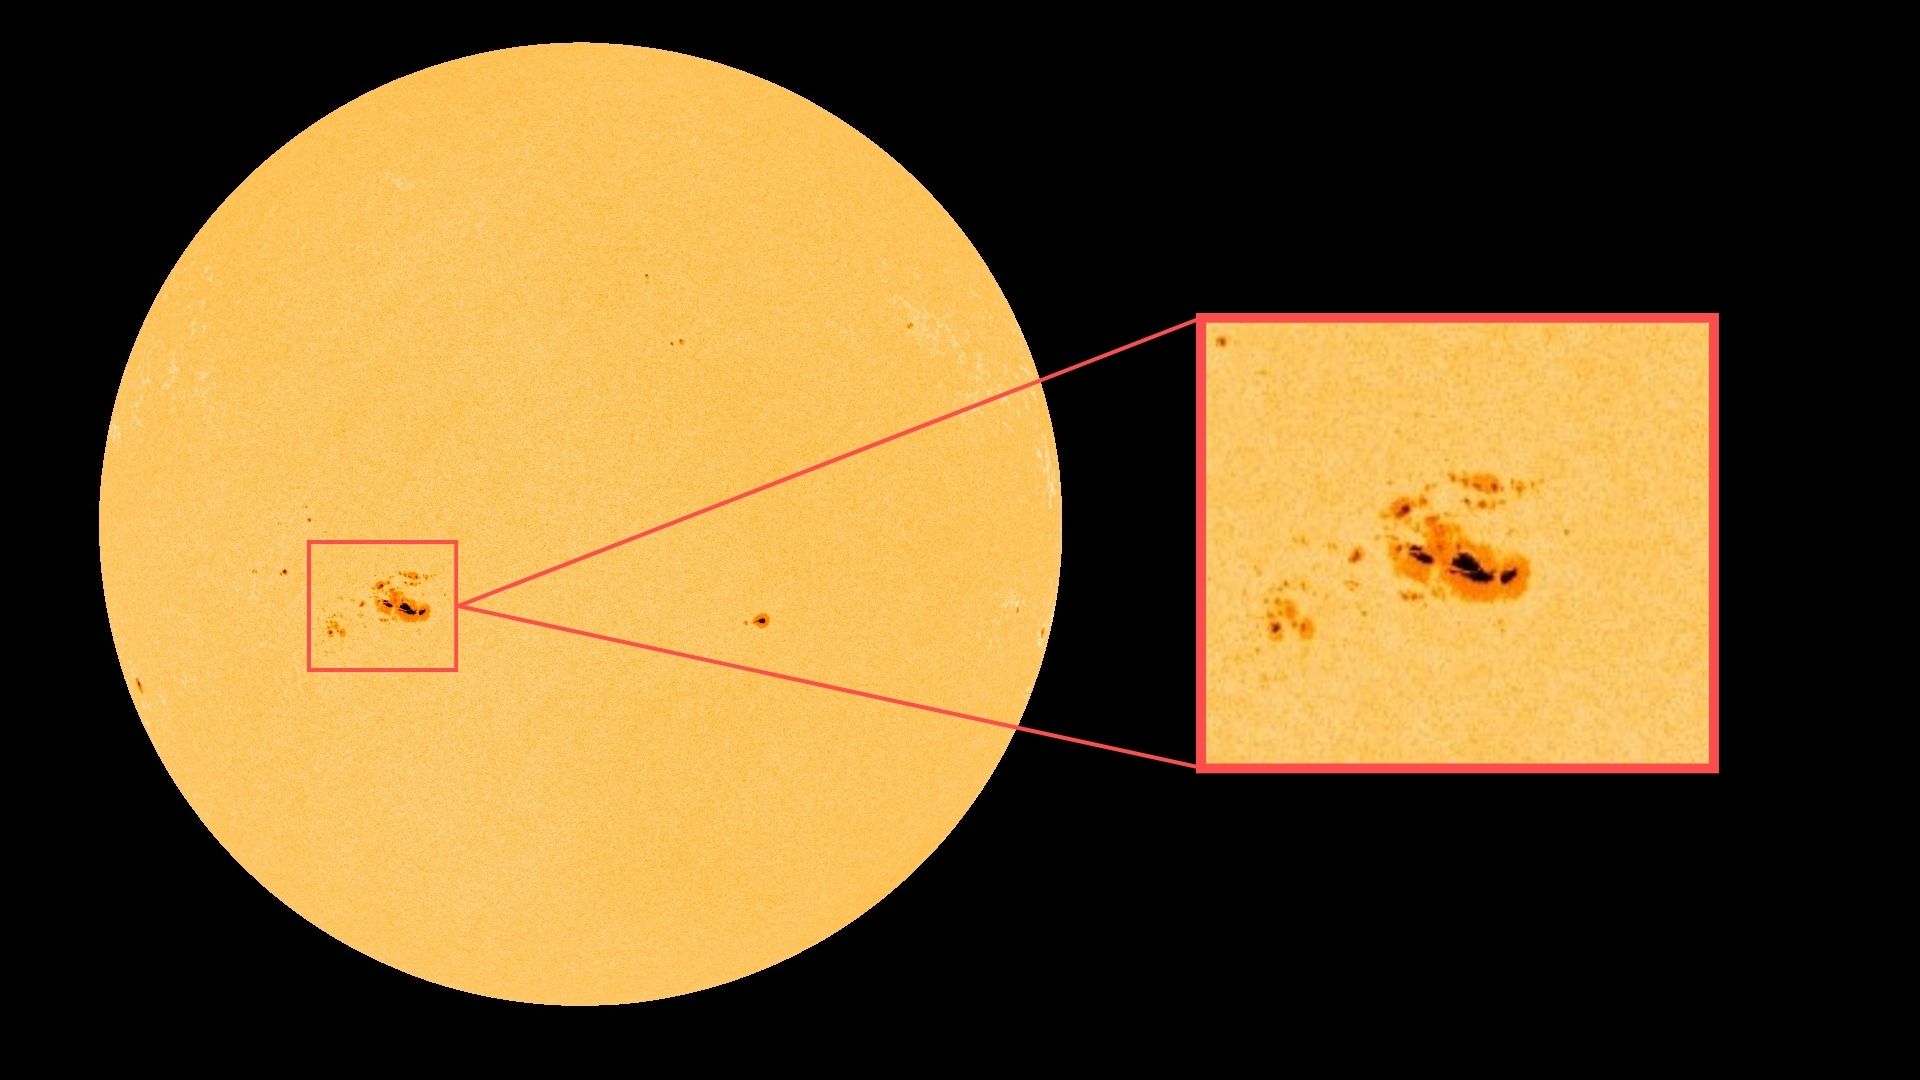 Sunspot AR3576 appears as a large dark orange spot on the surface of the Sun.